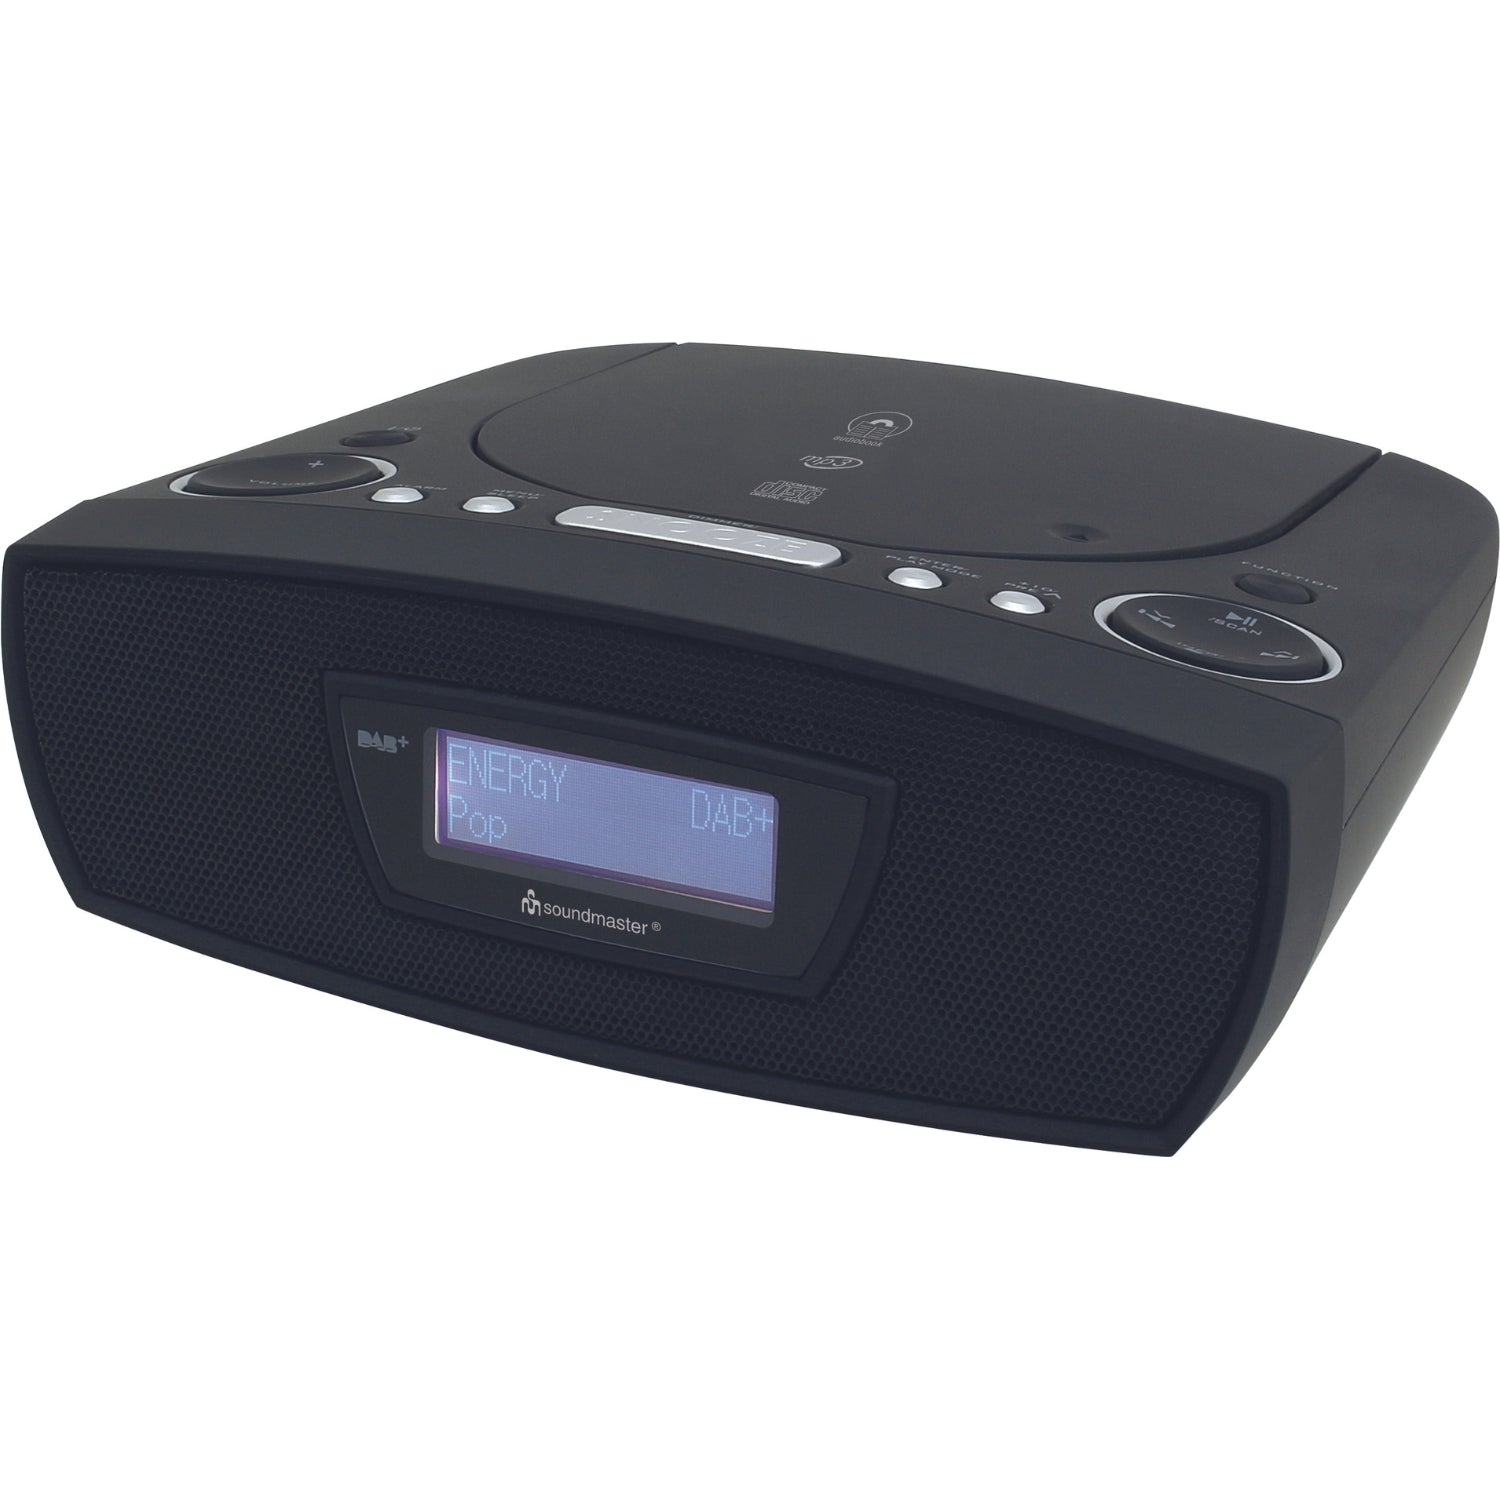 Soundmaster URD480SW DAB+/FM digital clock radio with CD/MP3/Resume function and USB